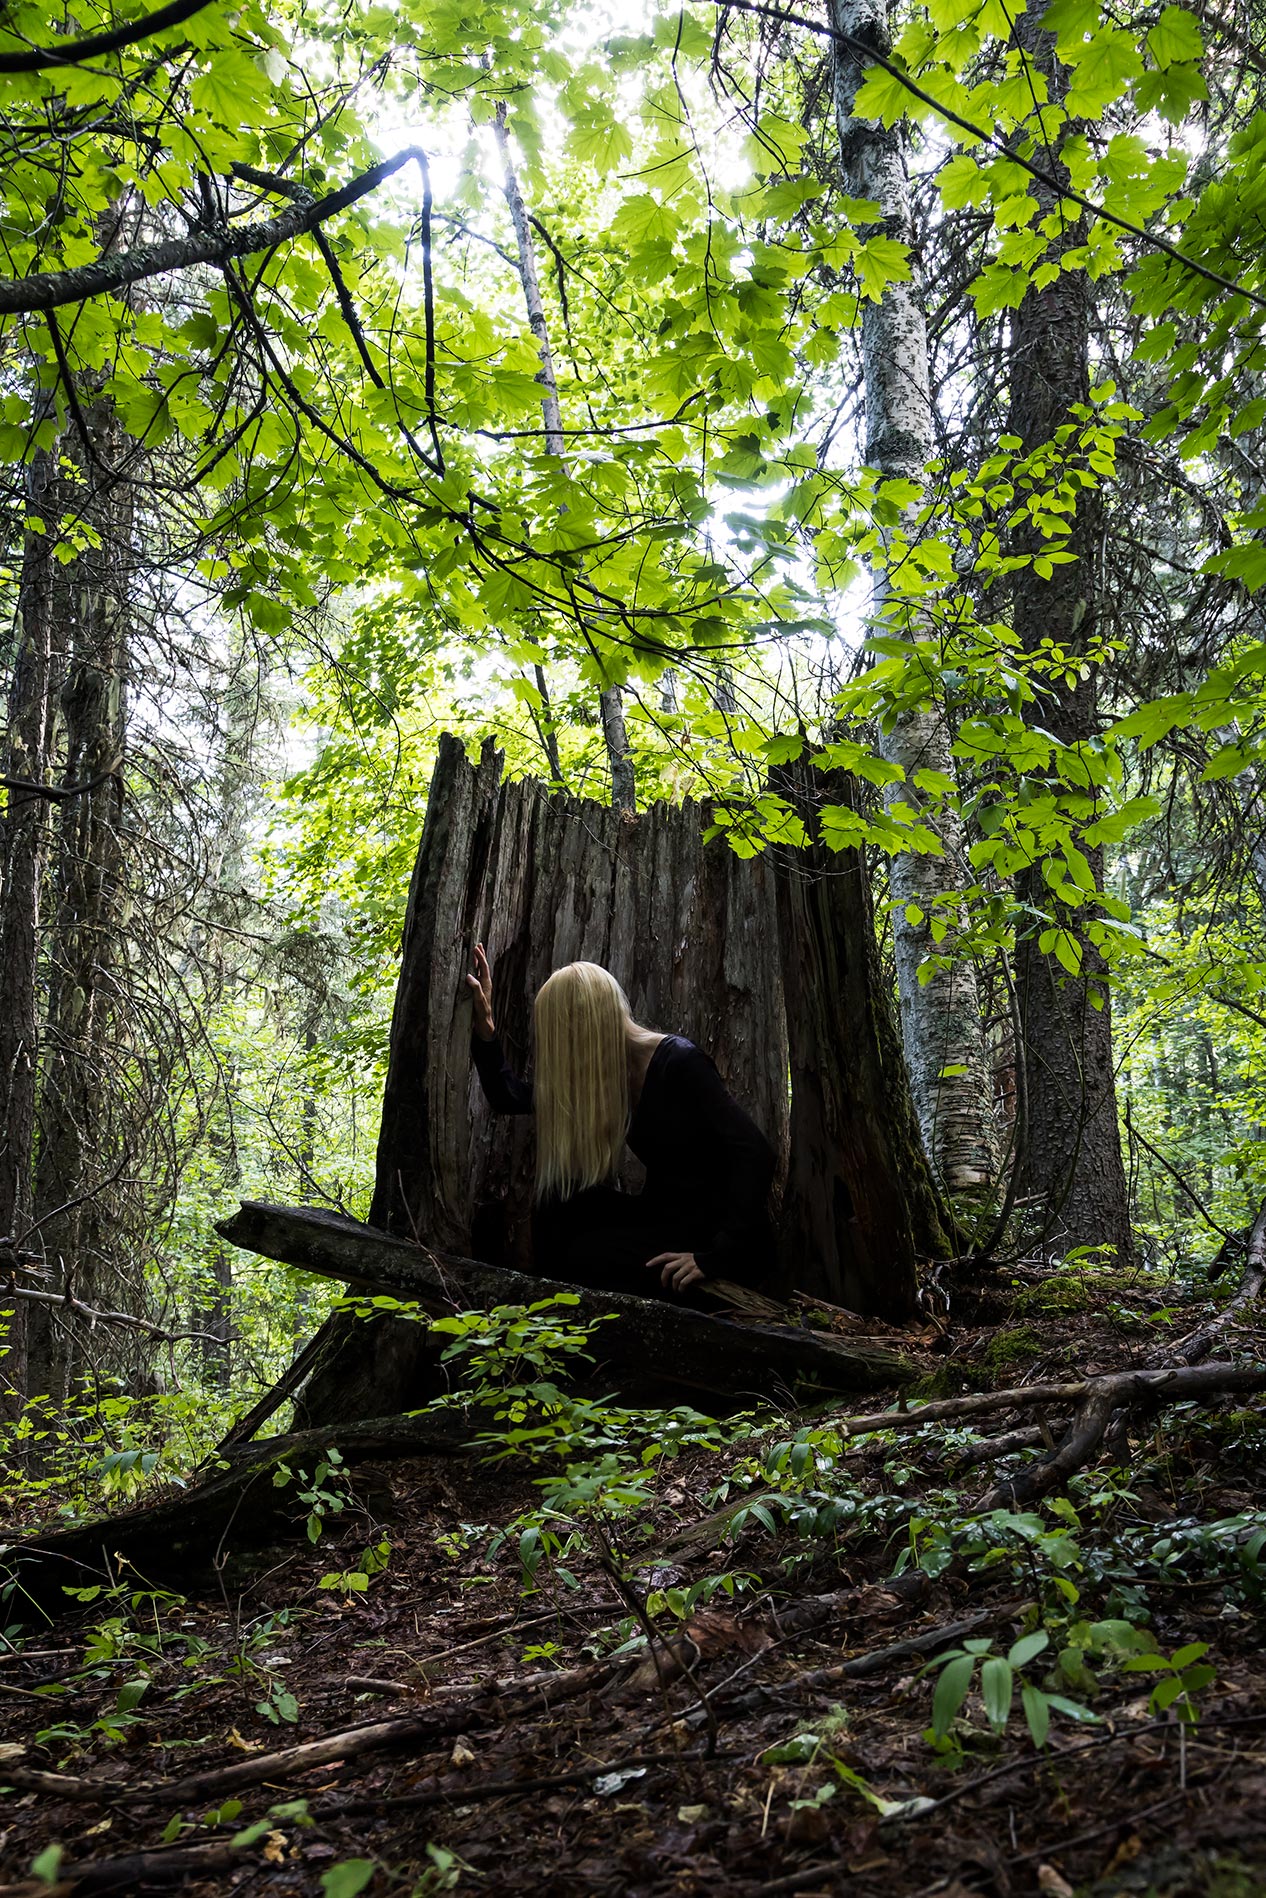 Le Repos de la Guerrière - Prayer - Woman kneeling in a hollow tree in a forest.